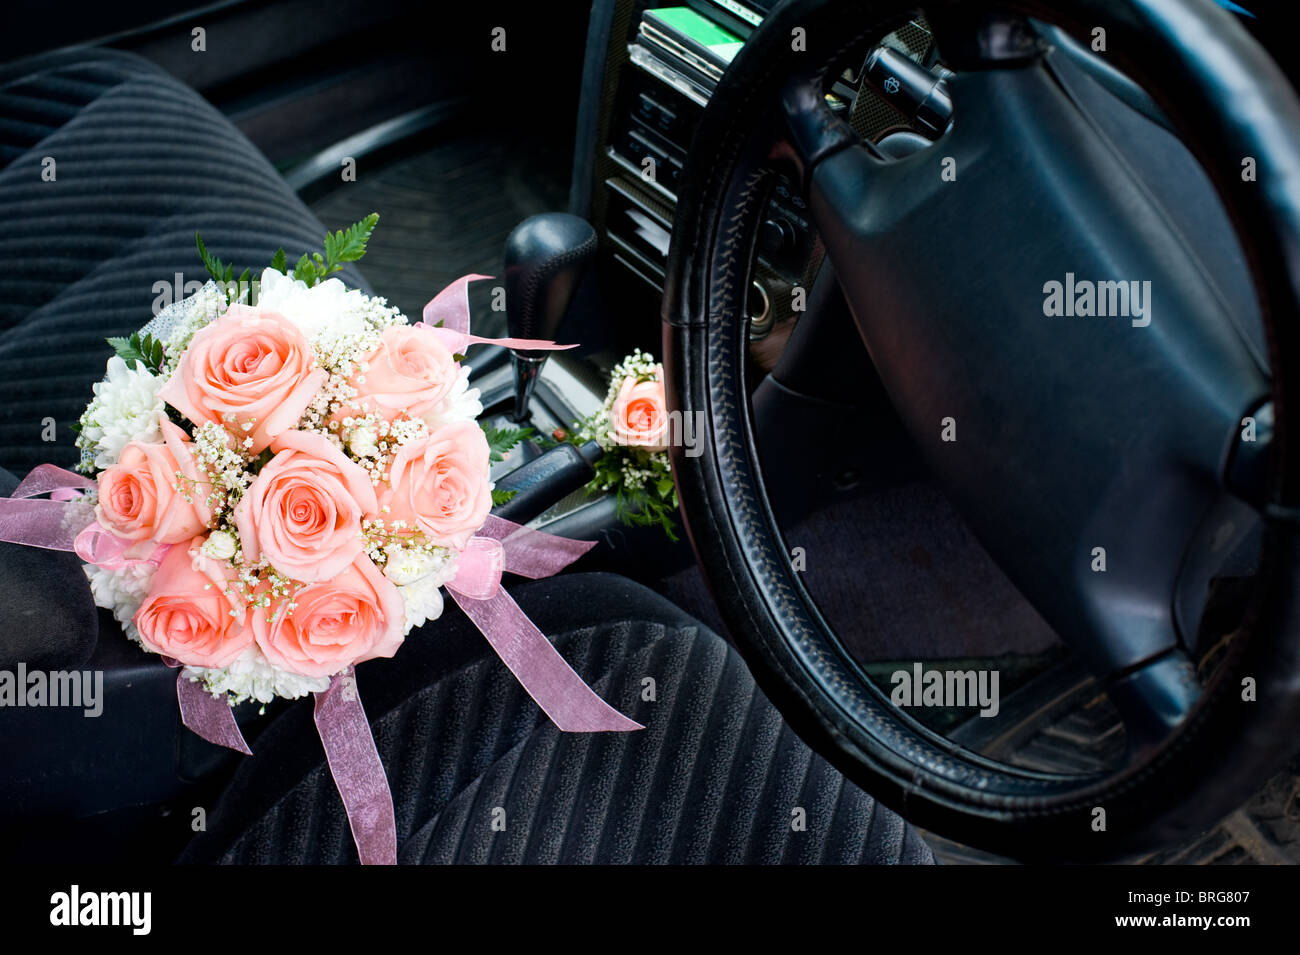 brides bouquet inside a car between front seats Stock Photo